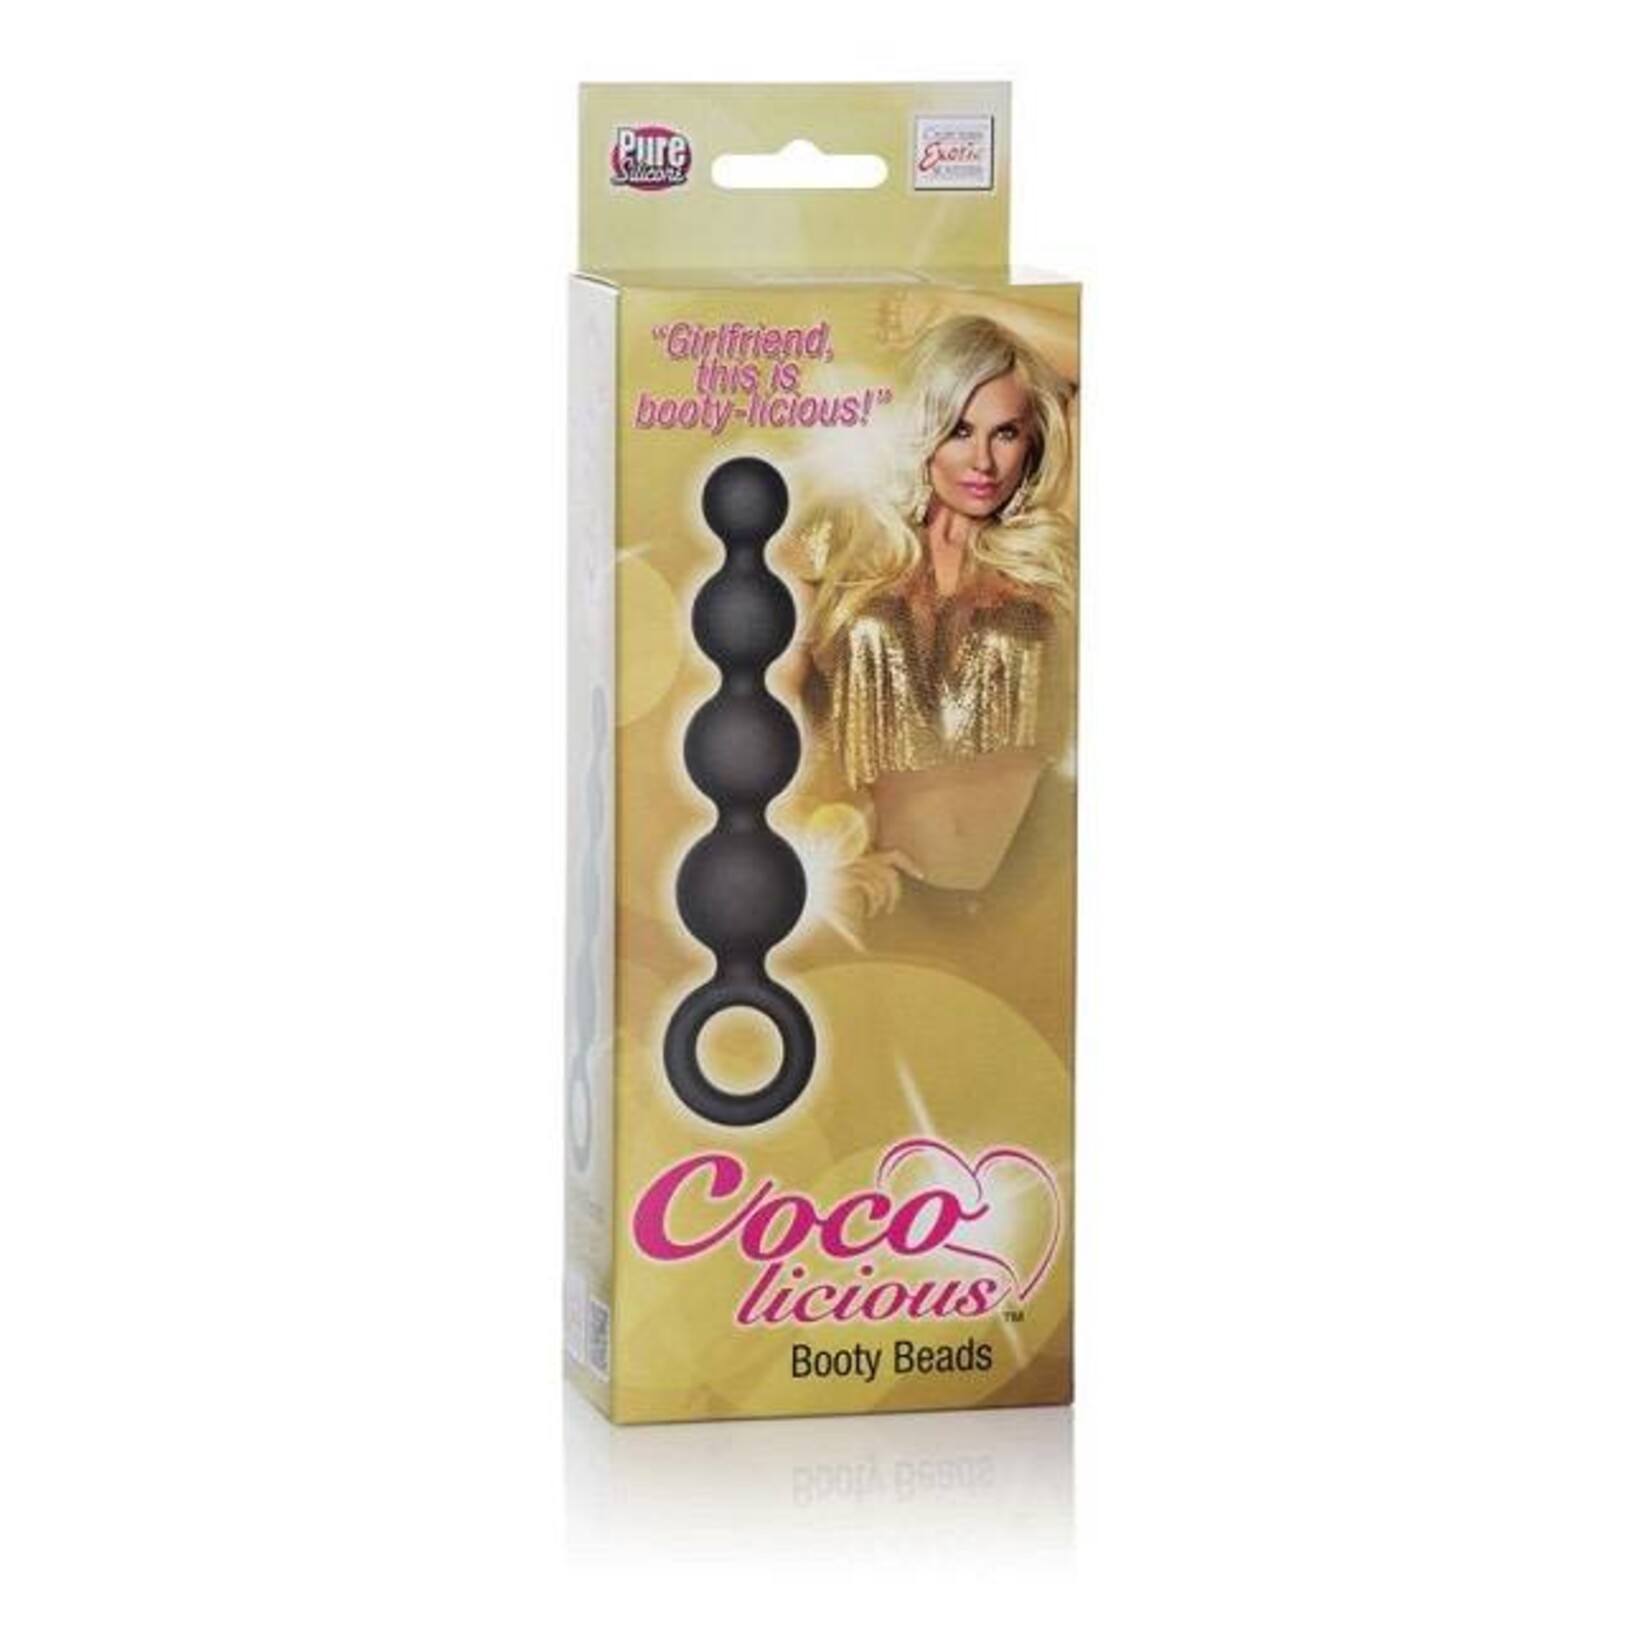 CalExotics Coco Licious Booty Beads